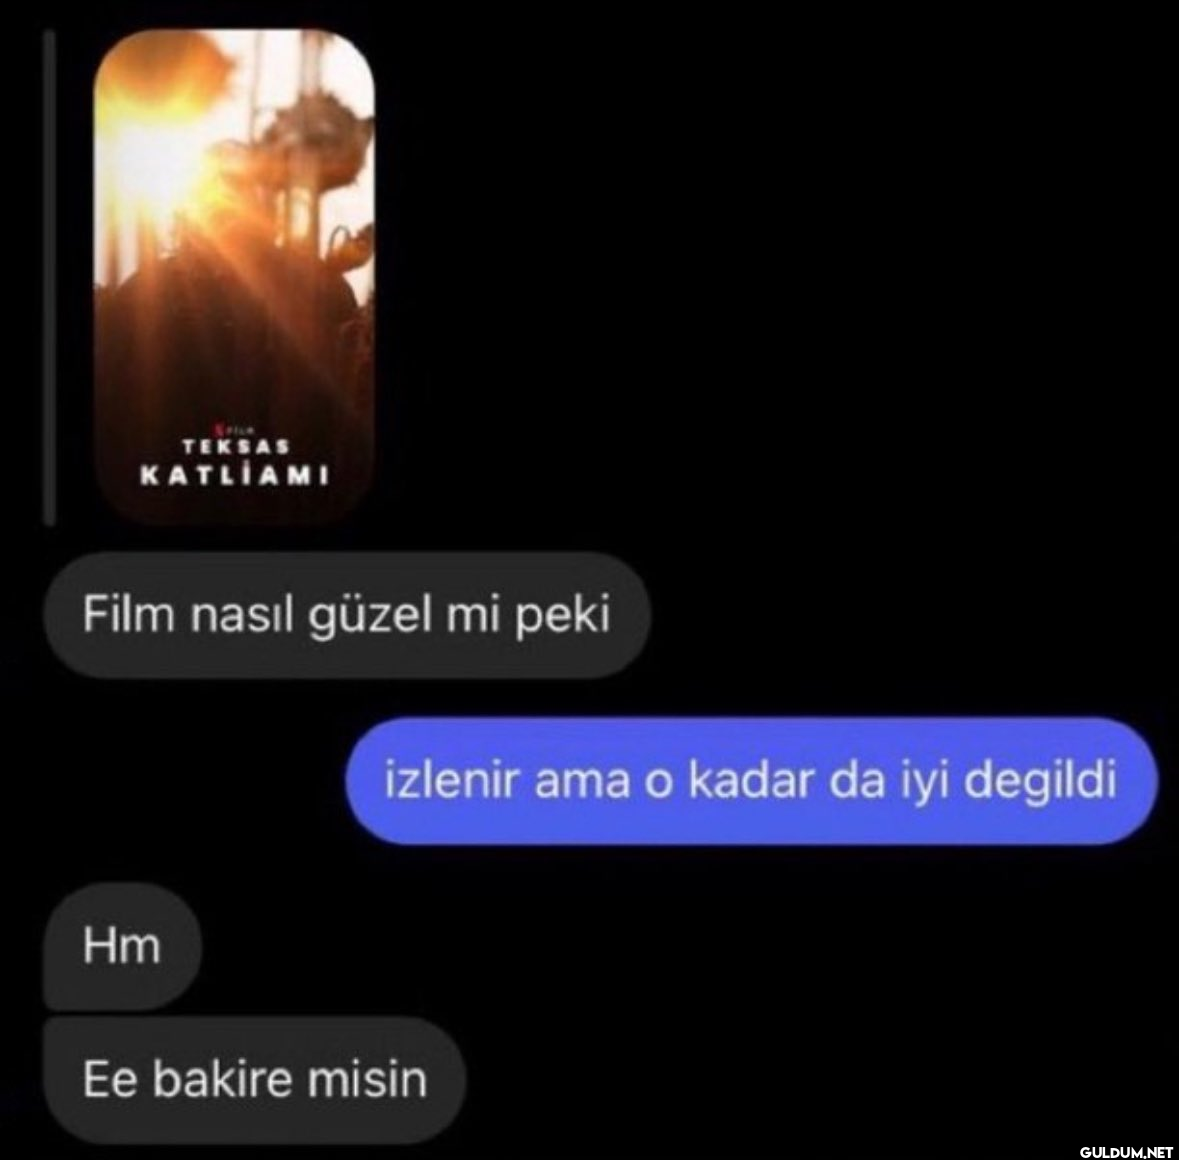 WILM TEKSAS KATLİAMI Film...